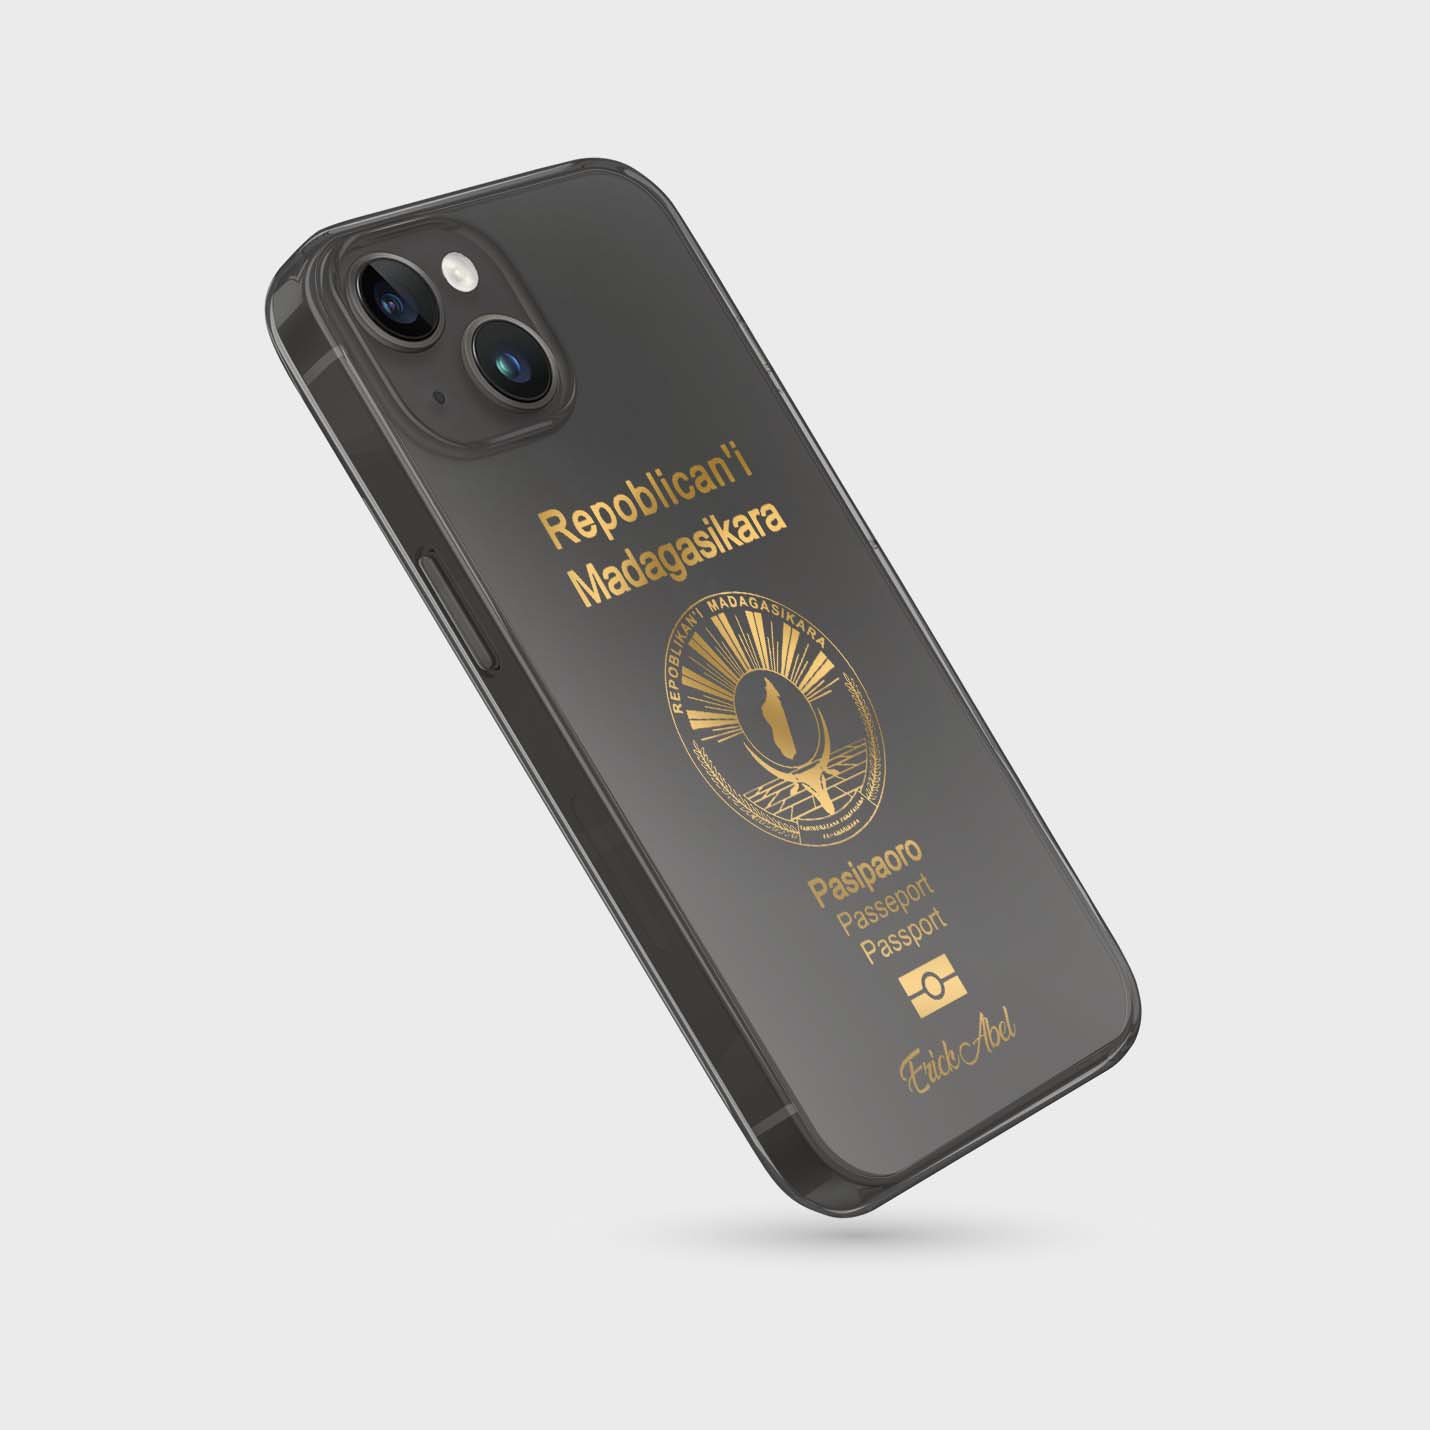 Handyhüllen mit Reisepass - Madagaskar - 1instaphone